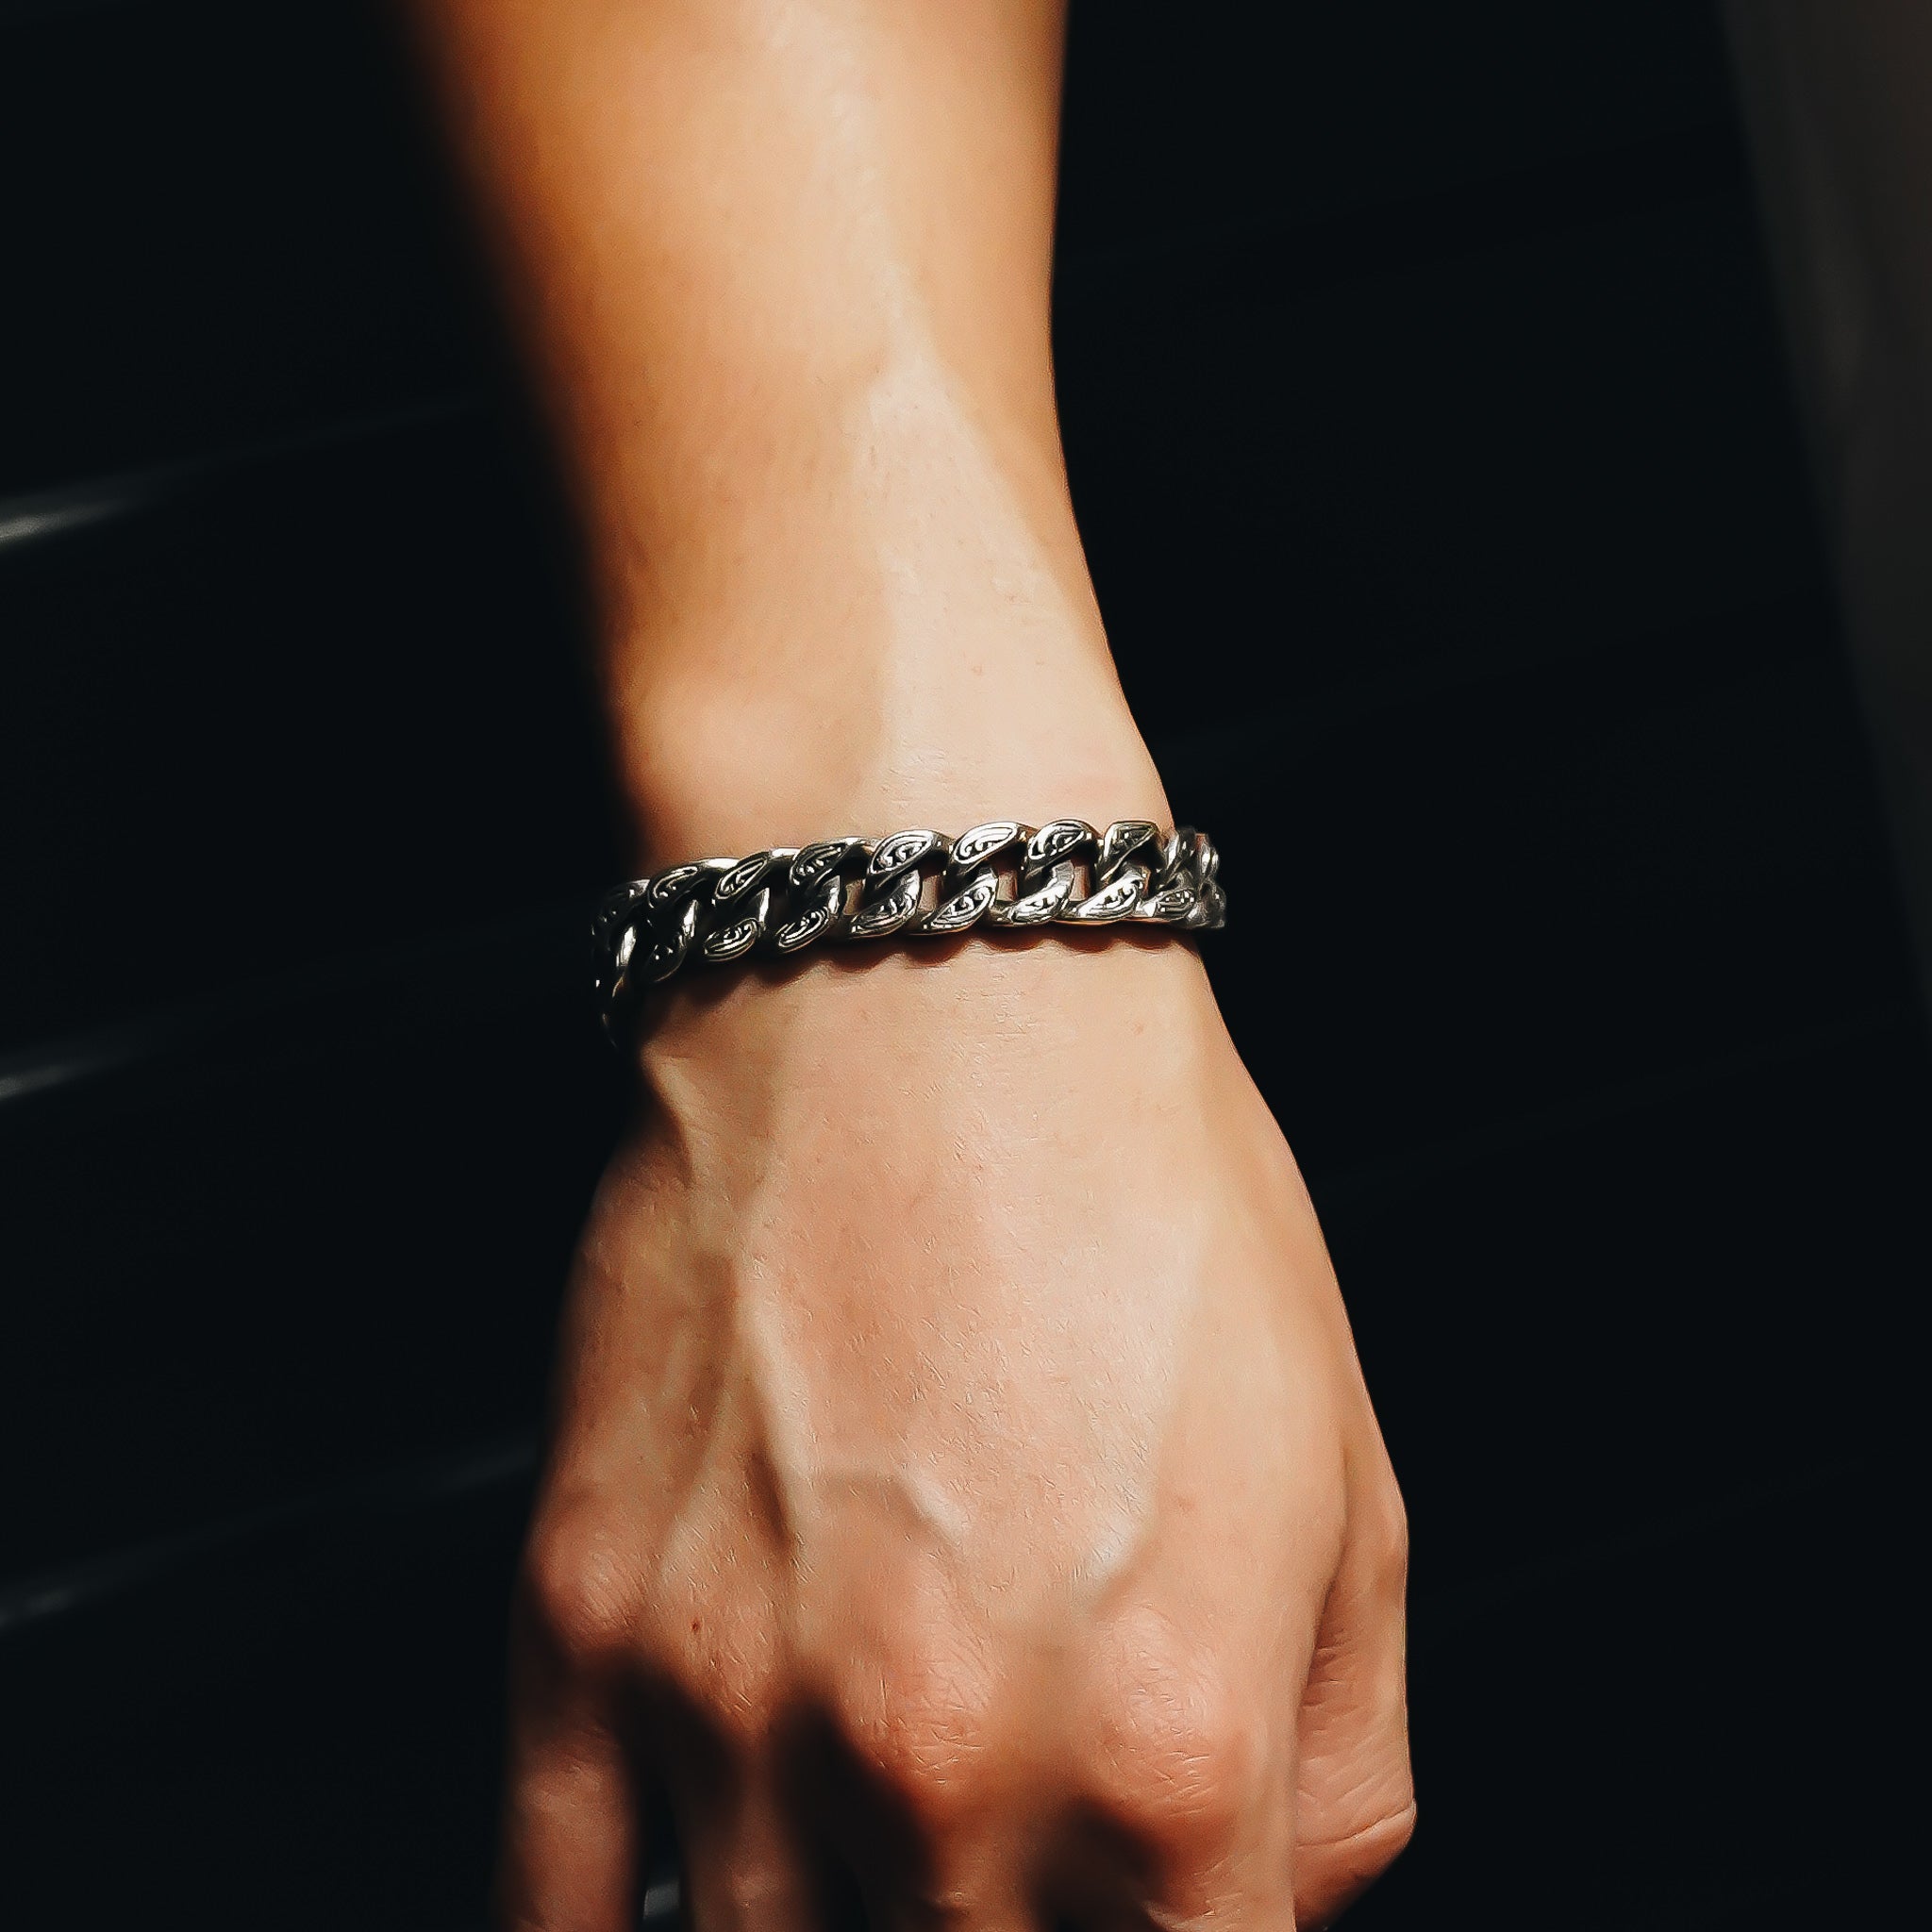 Curb Link Chain Bracelet in Platinum, 7”